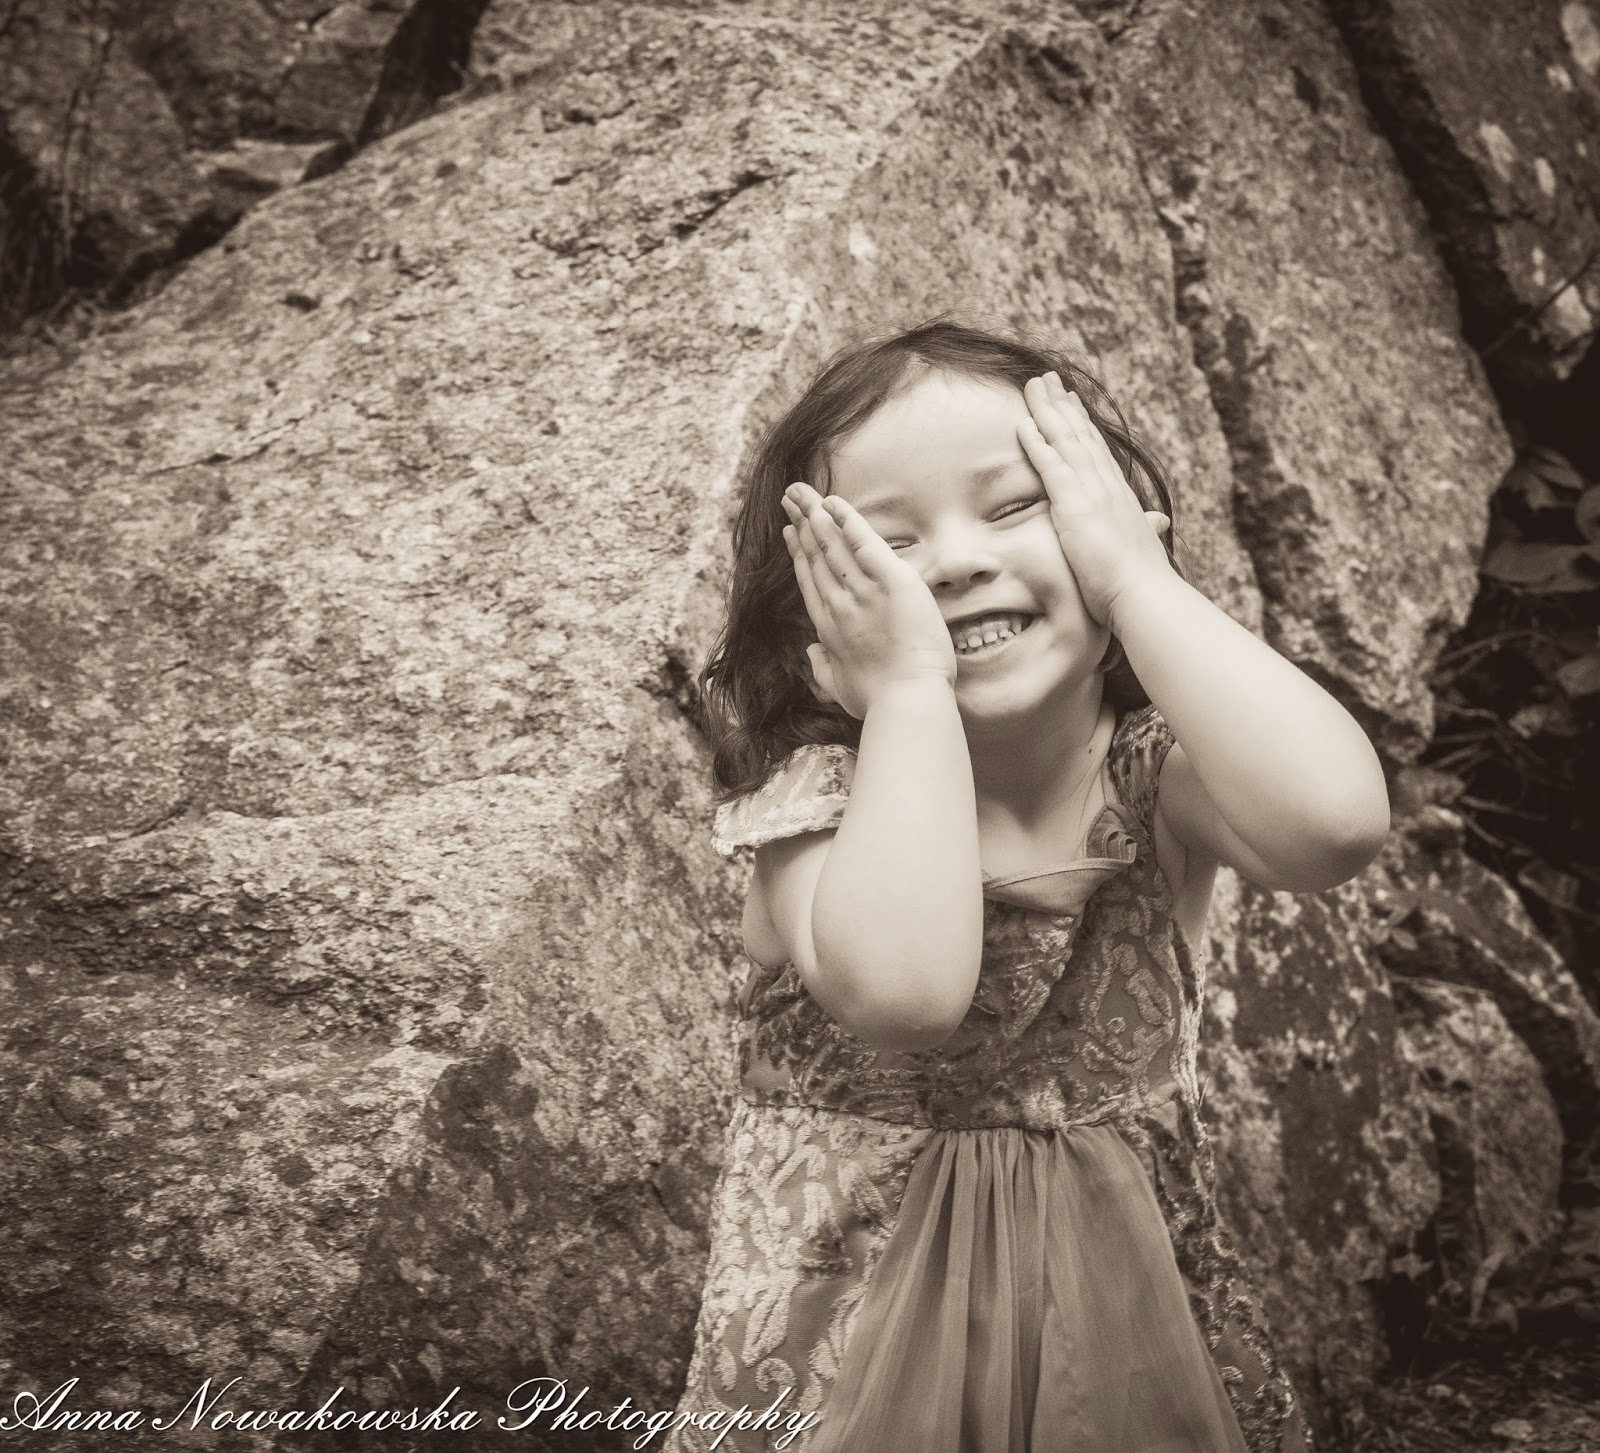 Portraits of little girl by Anna Nowakowska | dublin